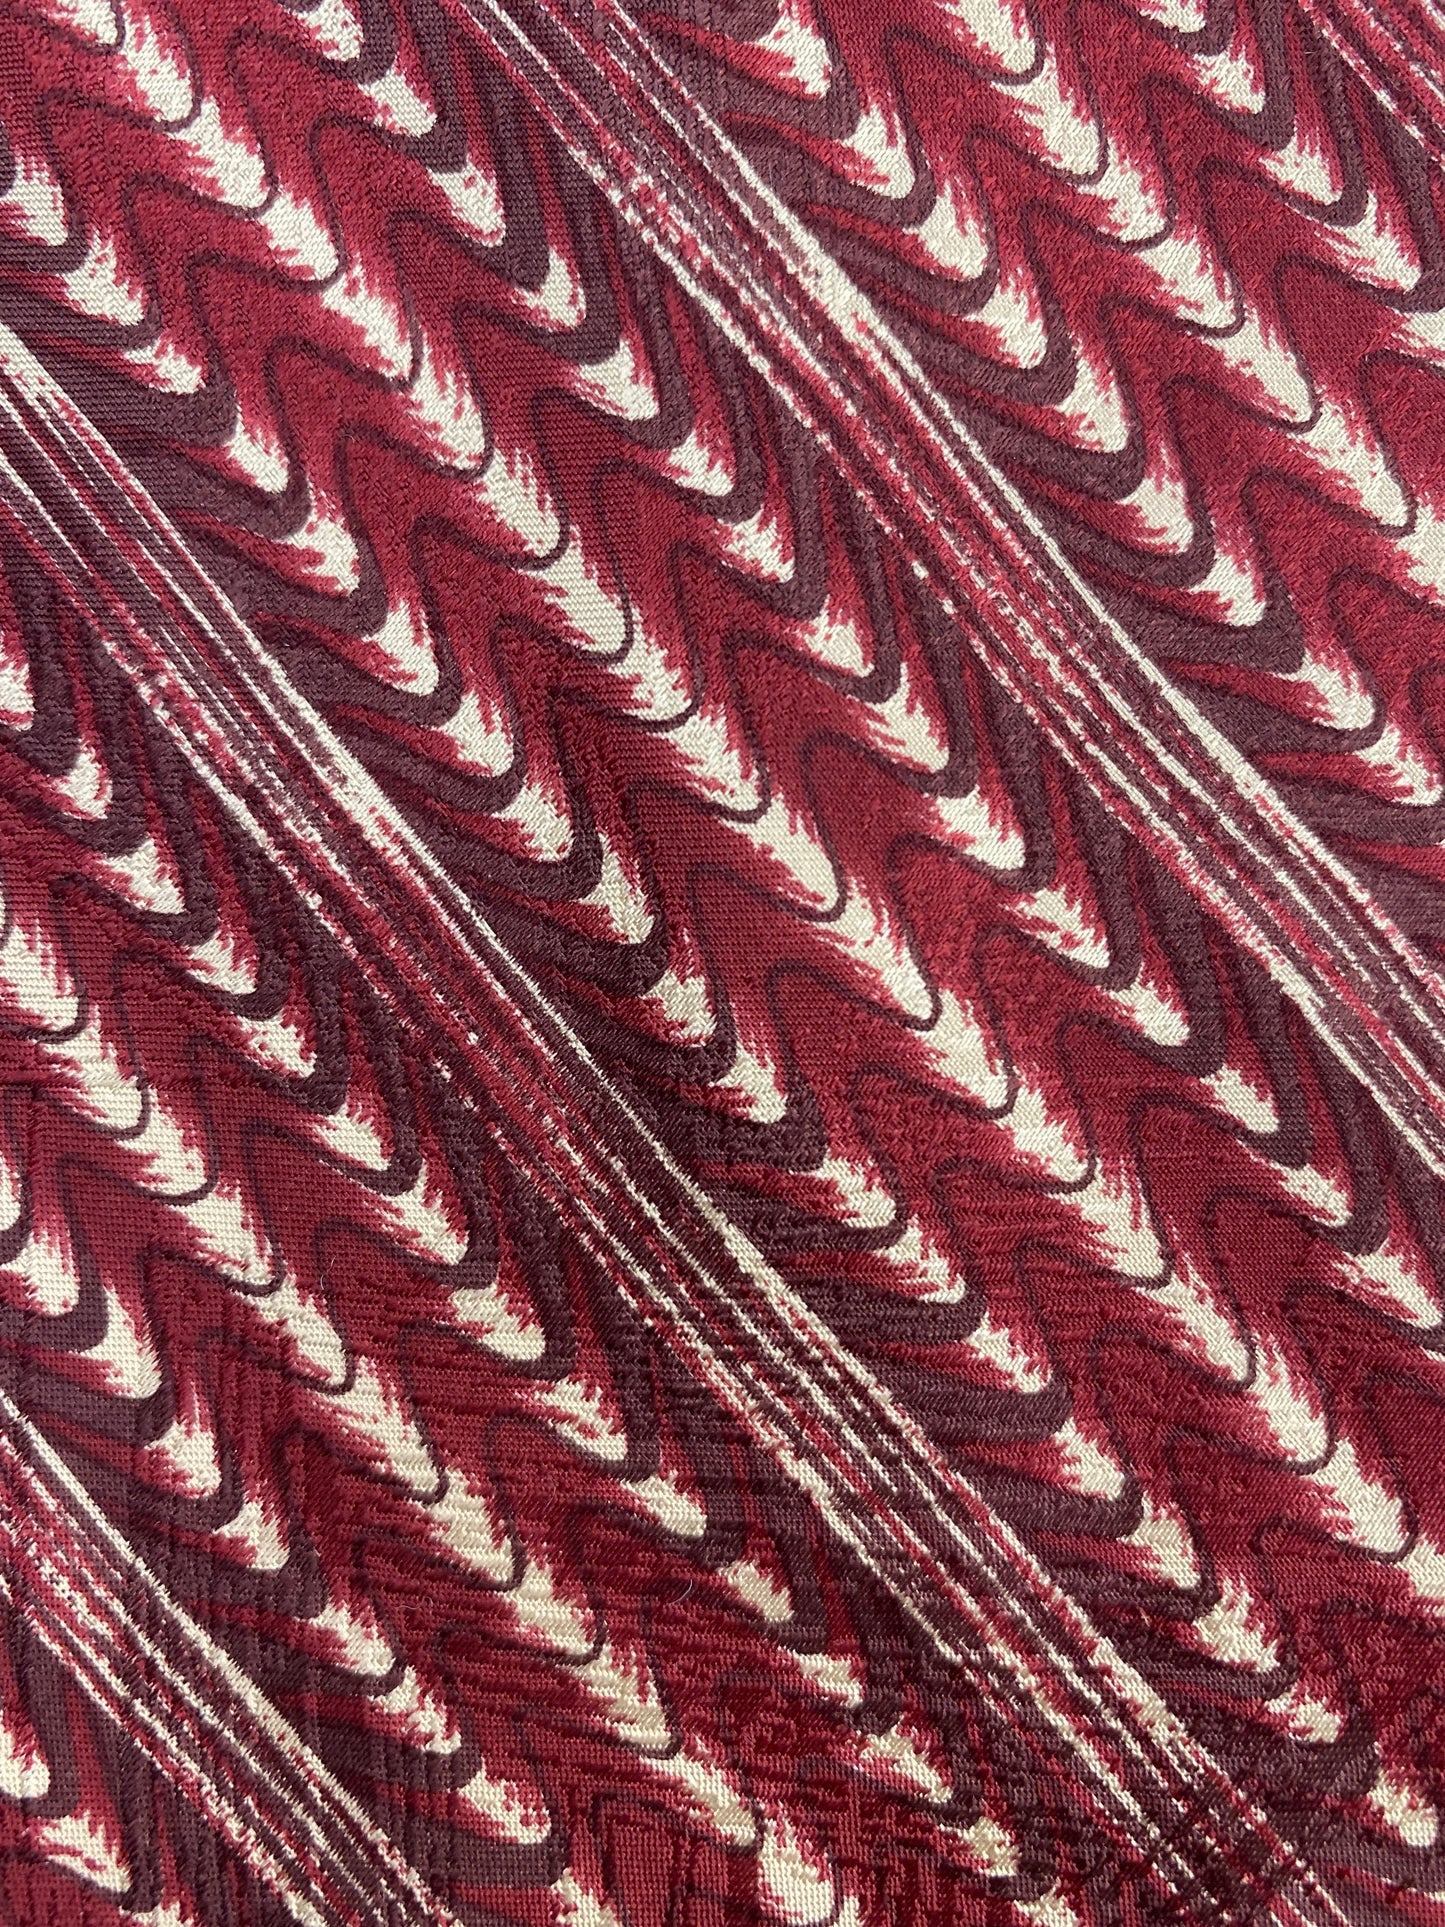 90s Deadstock Silk Necktie, Vintage Wine Diagonal Stripe Waves Pattern Tie, NOS